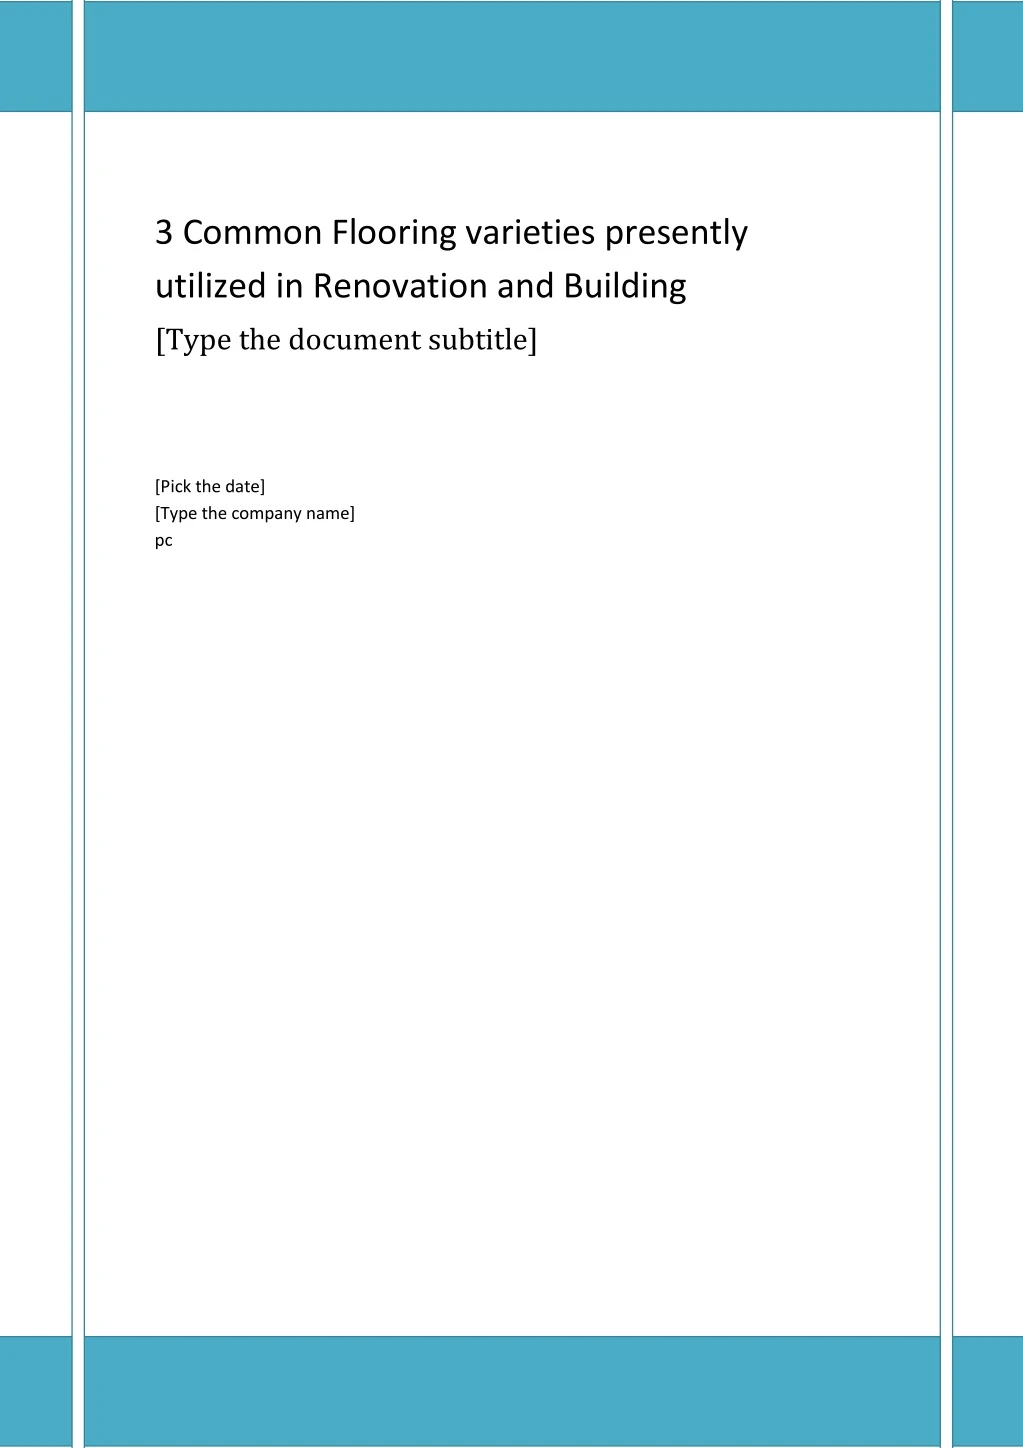 3 common flooring varieties presently utilized